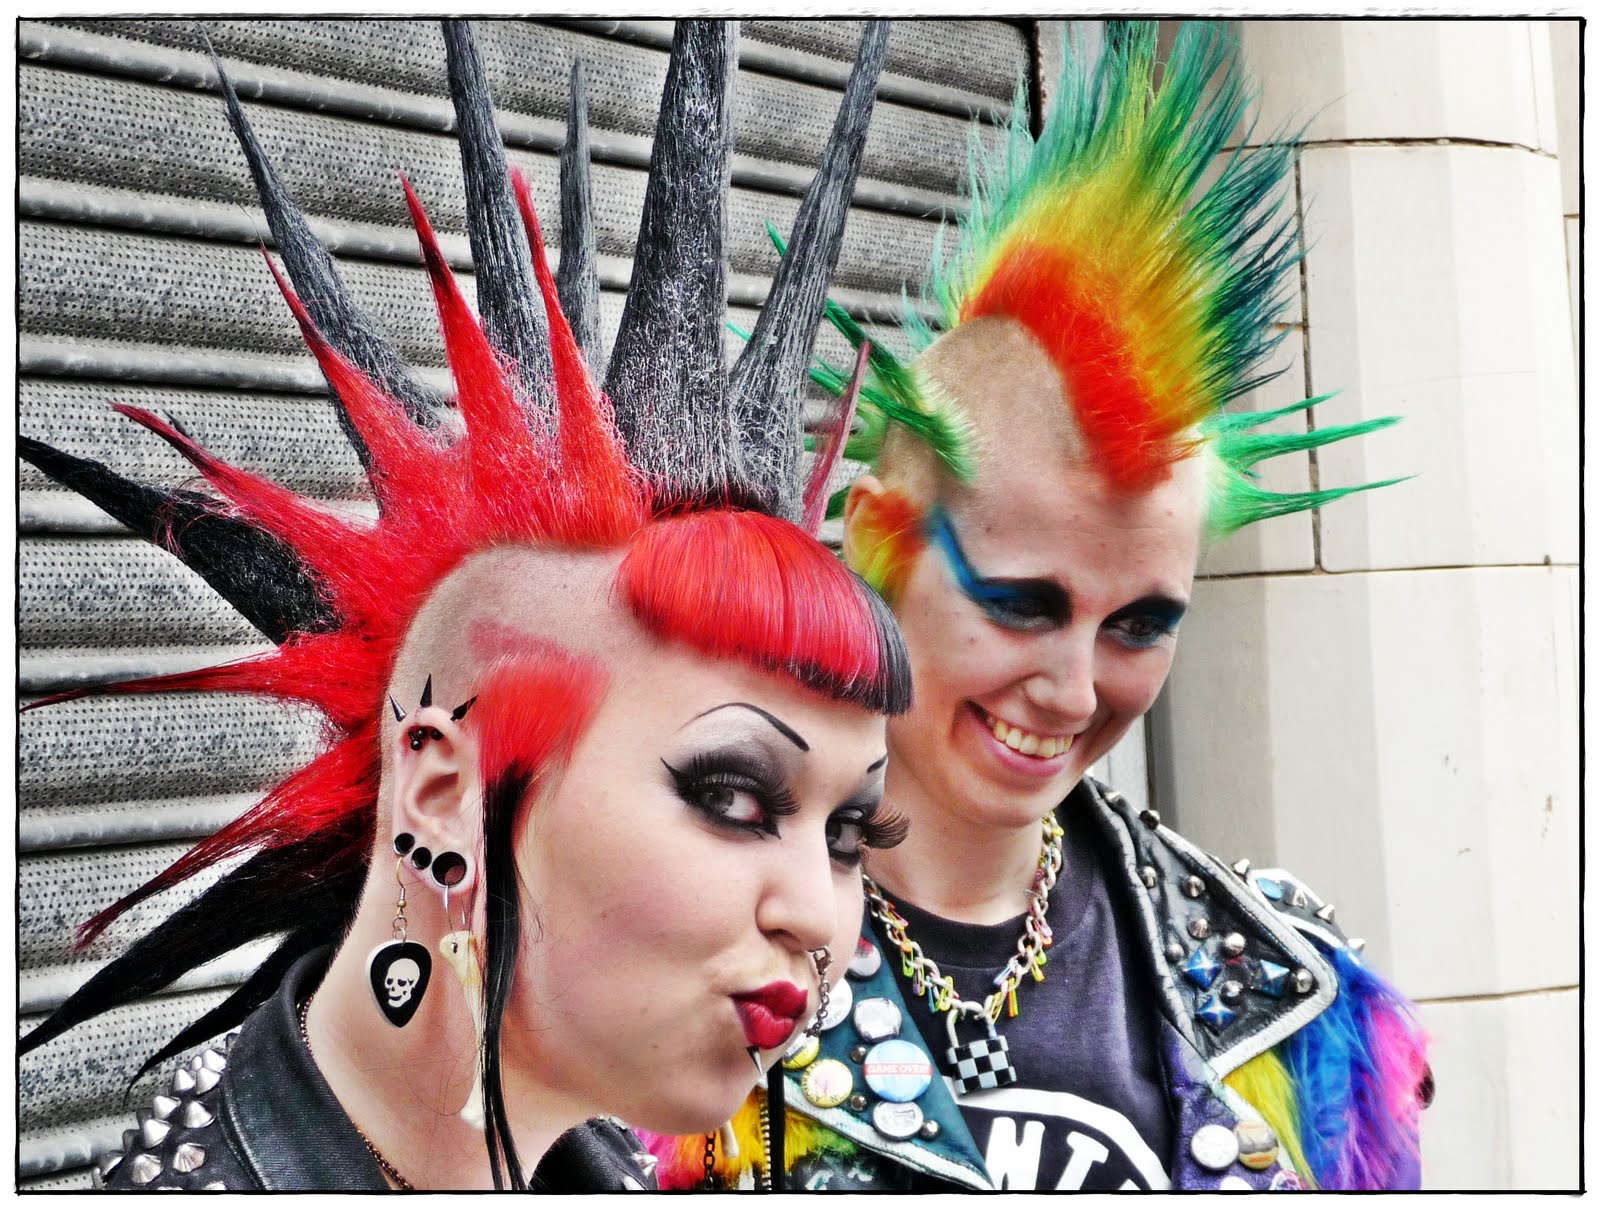 tempusfugit photography.....: ©Rebellion in the UK: punks arrive in ...